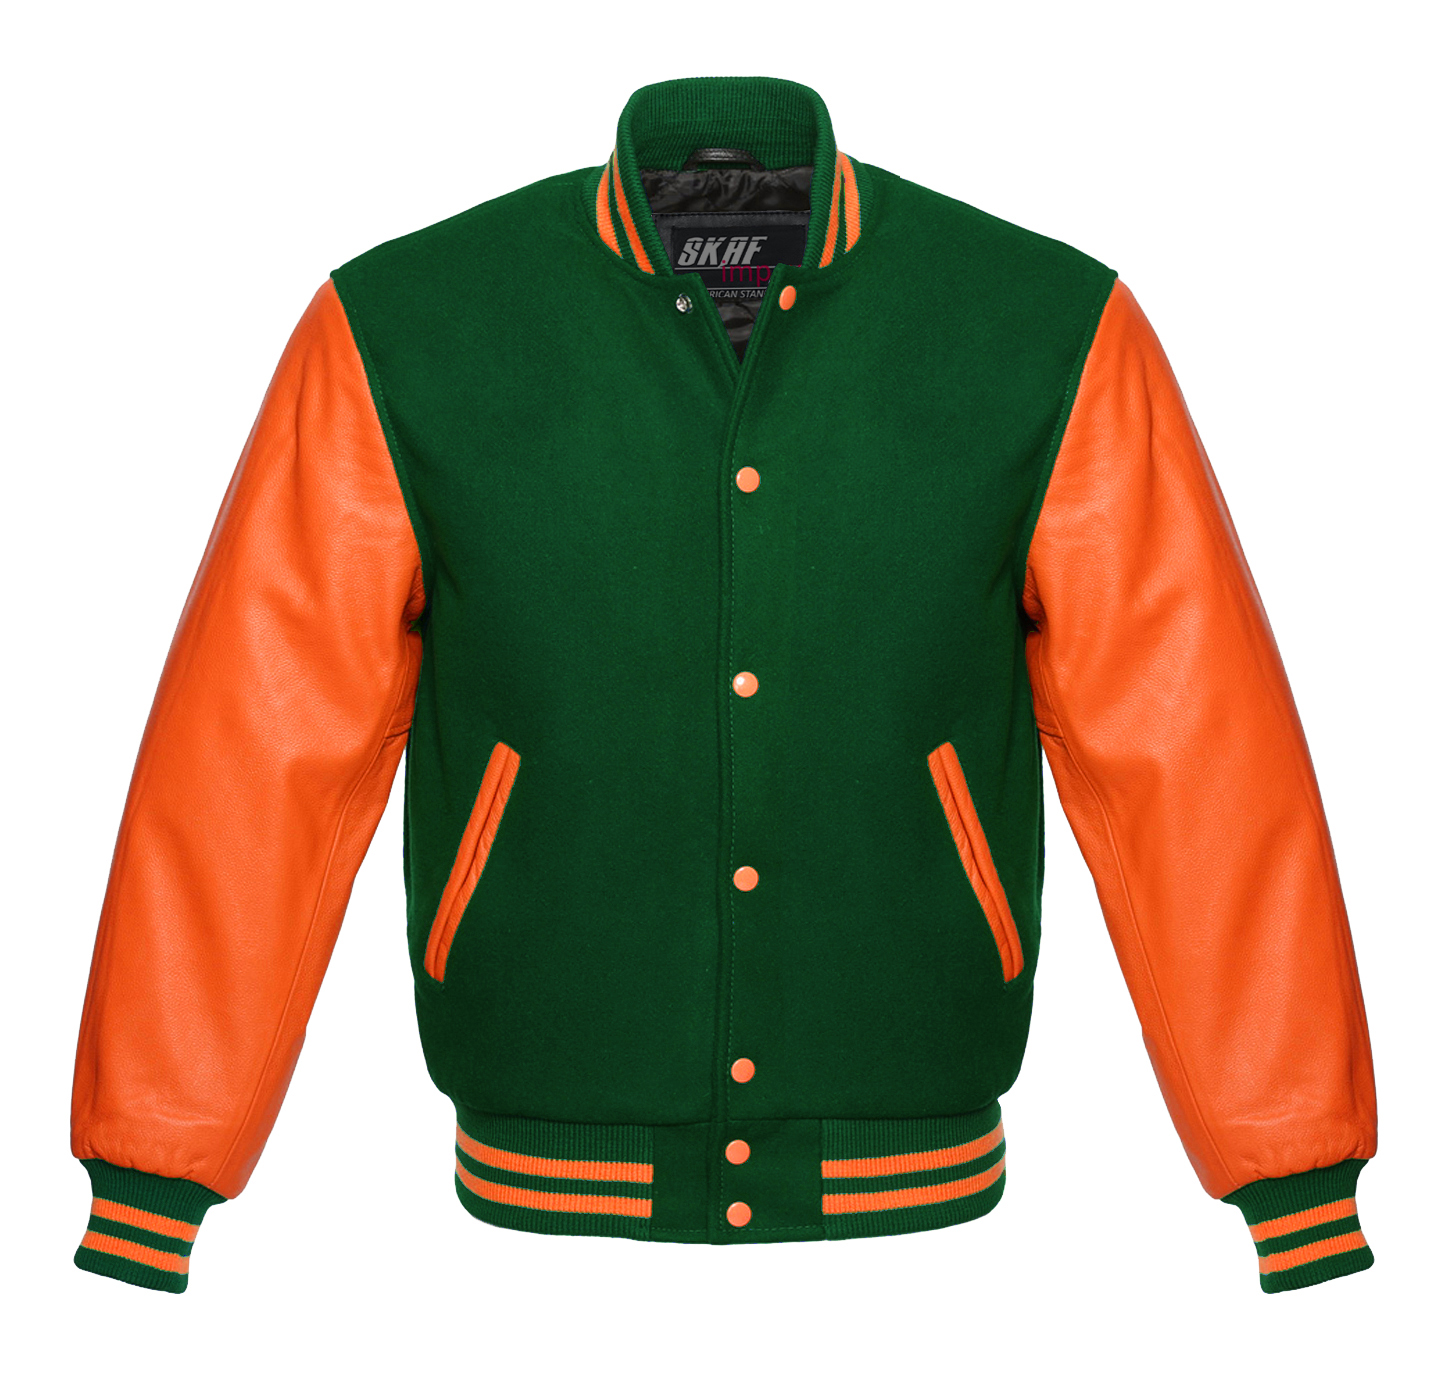 Jakewood Men's Olive Green Lightweight Baseball Varsity Jacket Fire-Hook Closure Style #3444 4X